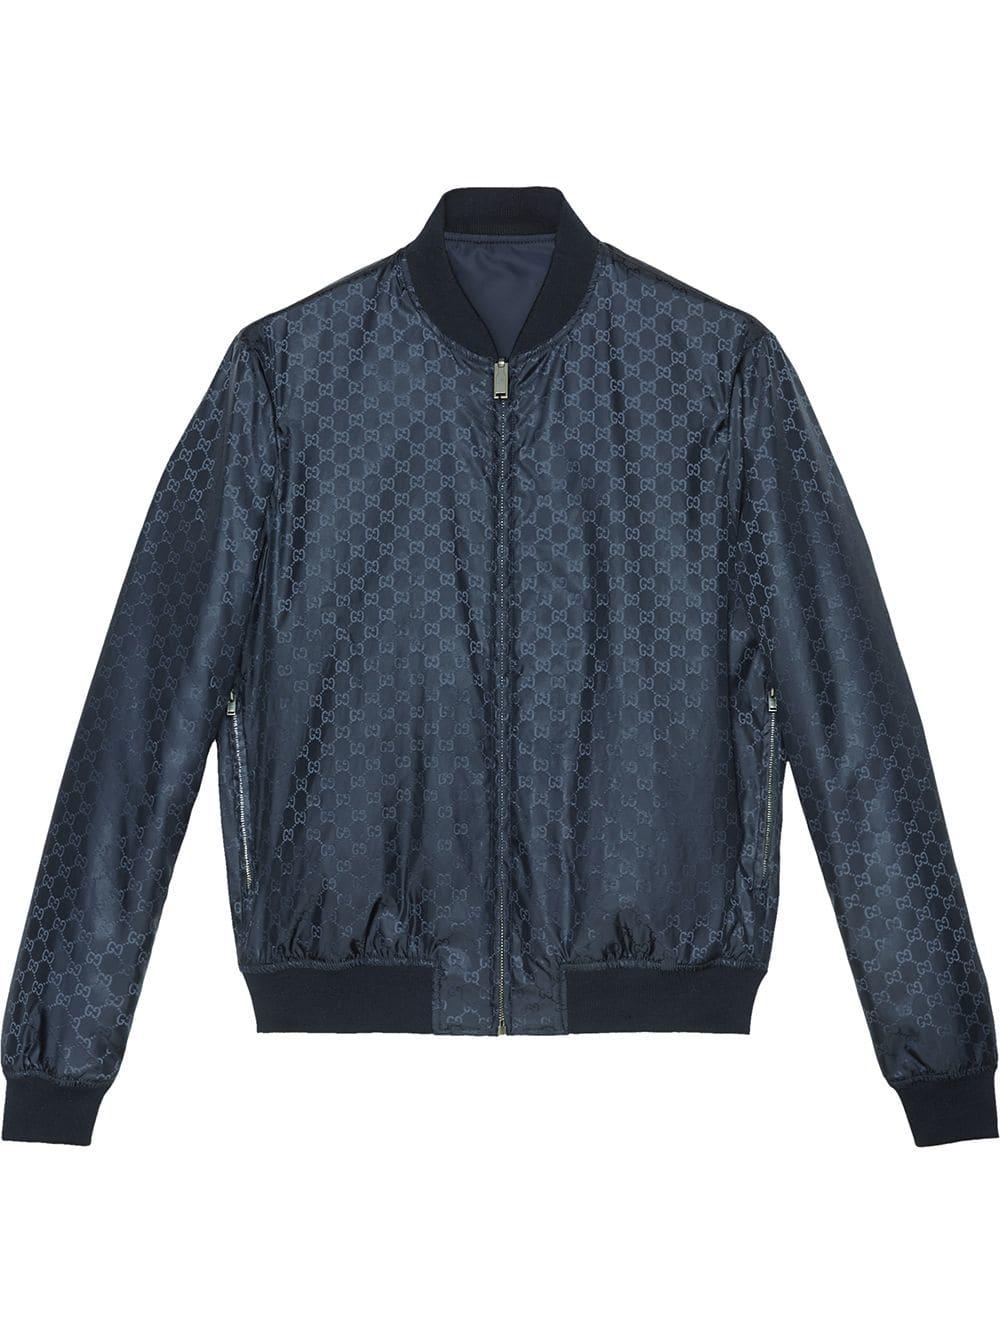 Gucci Reversible Gg Jacquard Nylon Bomber Jacket in Blue for Men | Lyst